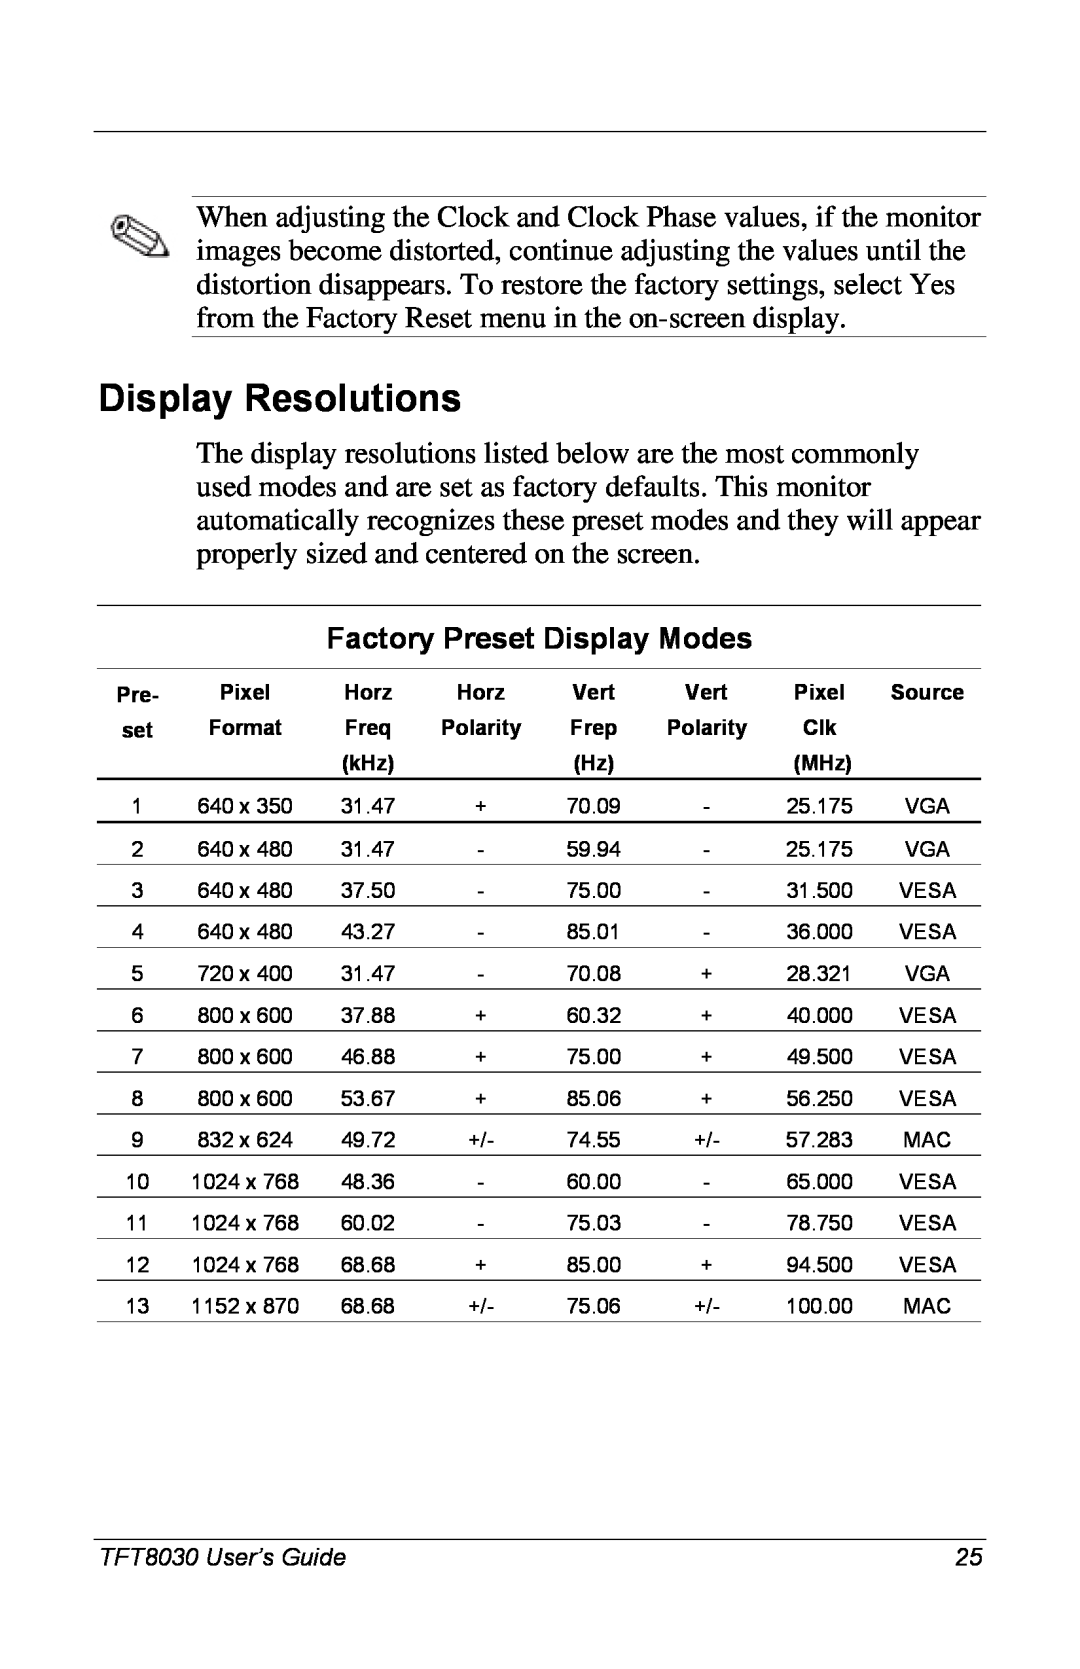 Compaq 8030 manual Display Resolutions, Factory Preset Display Modes 